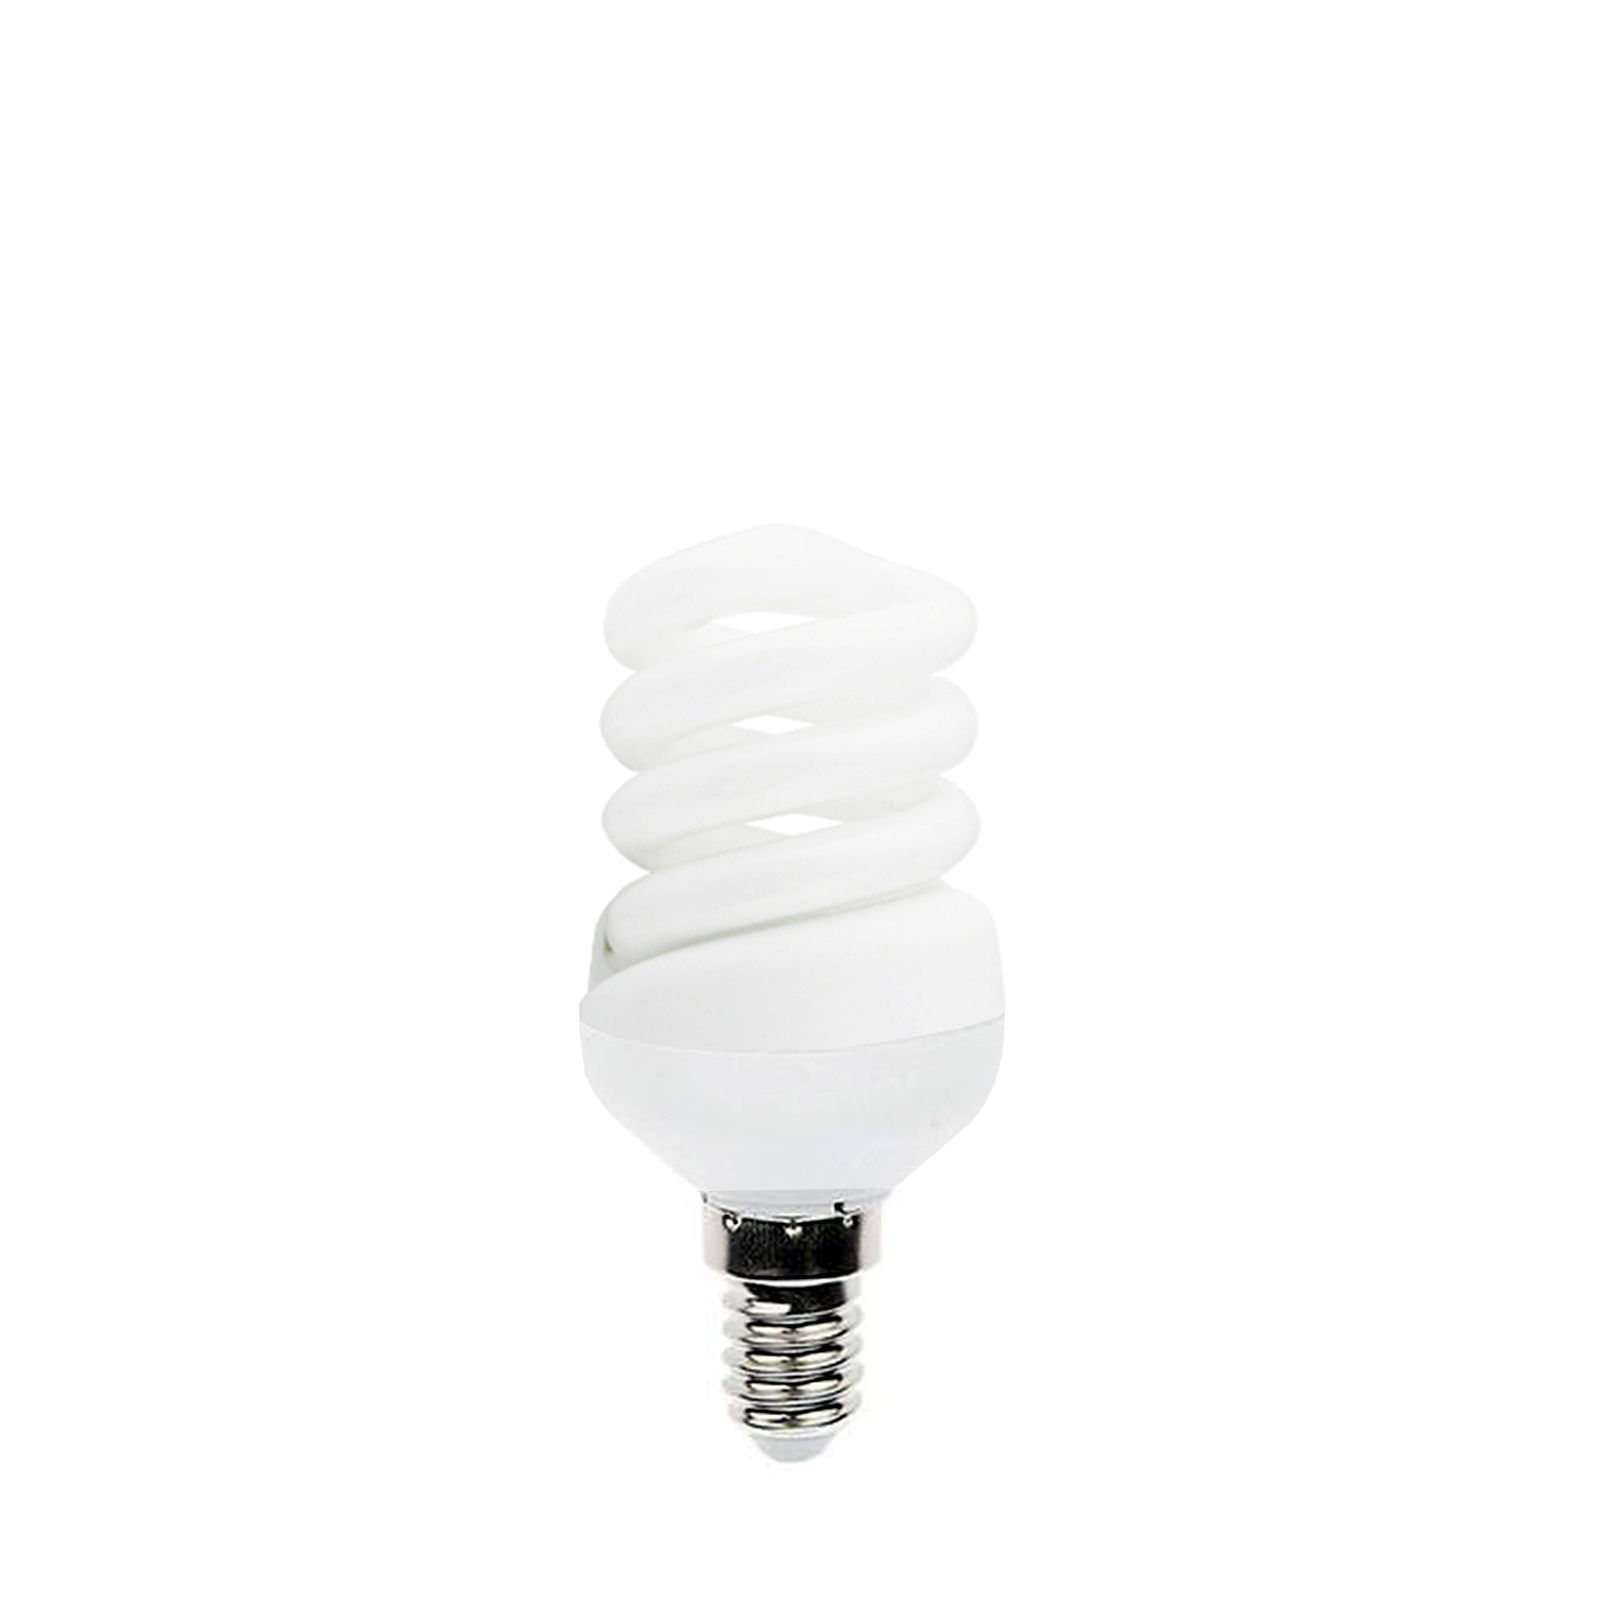 لامپ کم مصرف 9 وات لامپ نور مدل PS پایه E14 بسته 8 عددی